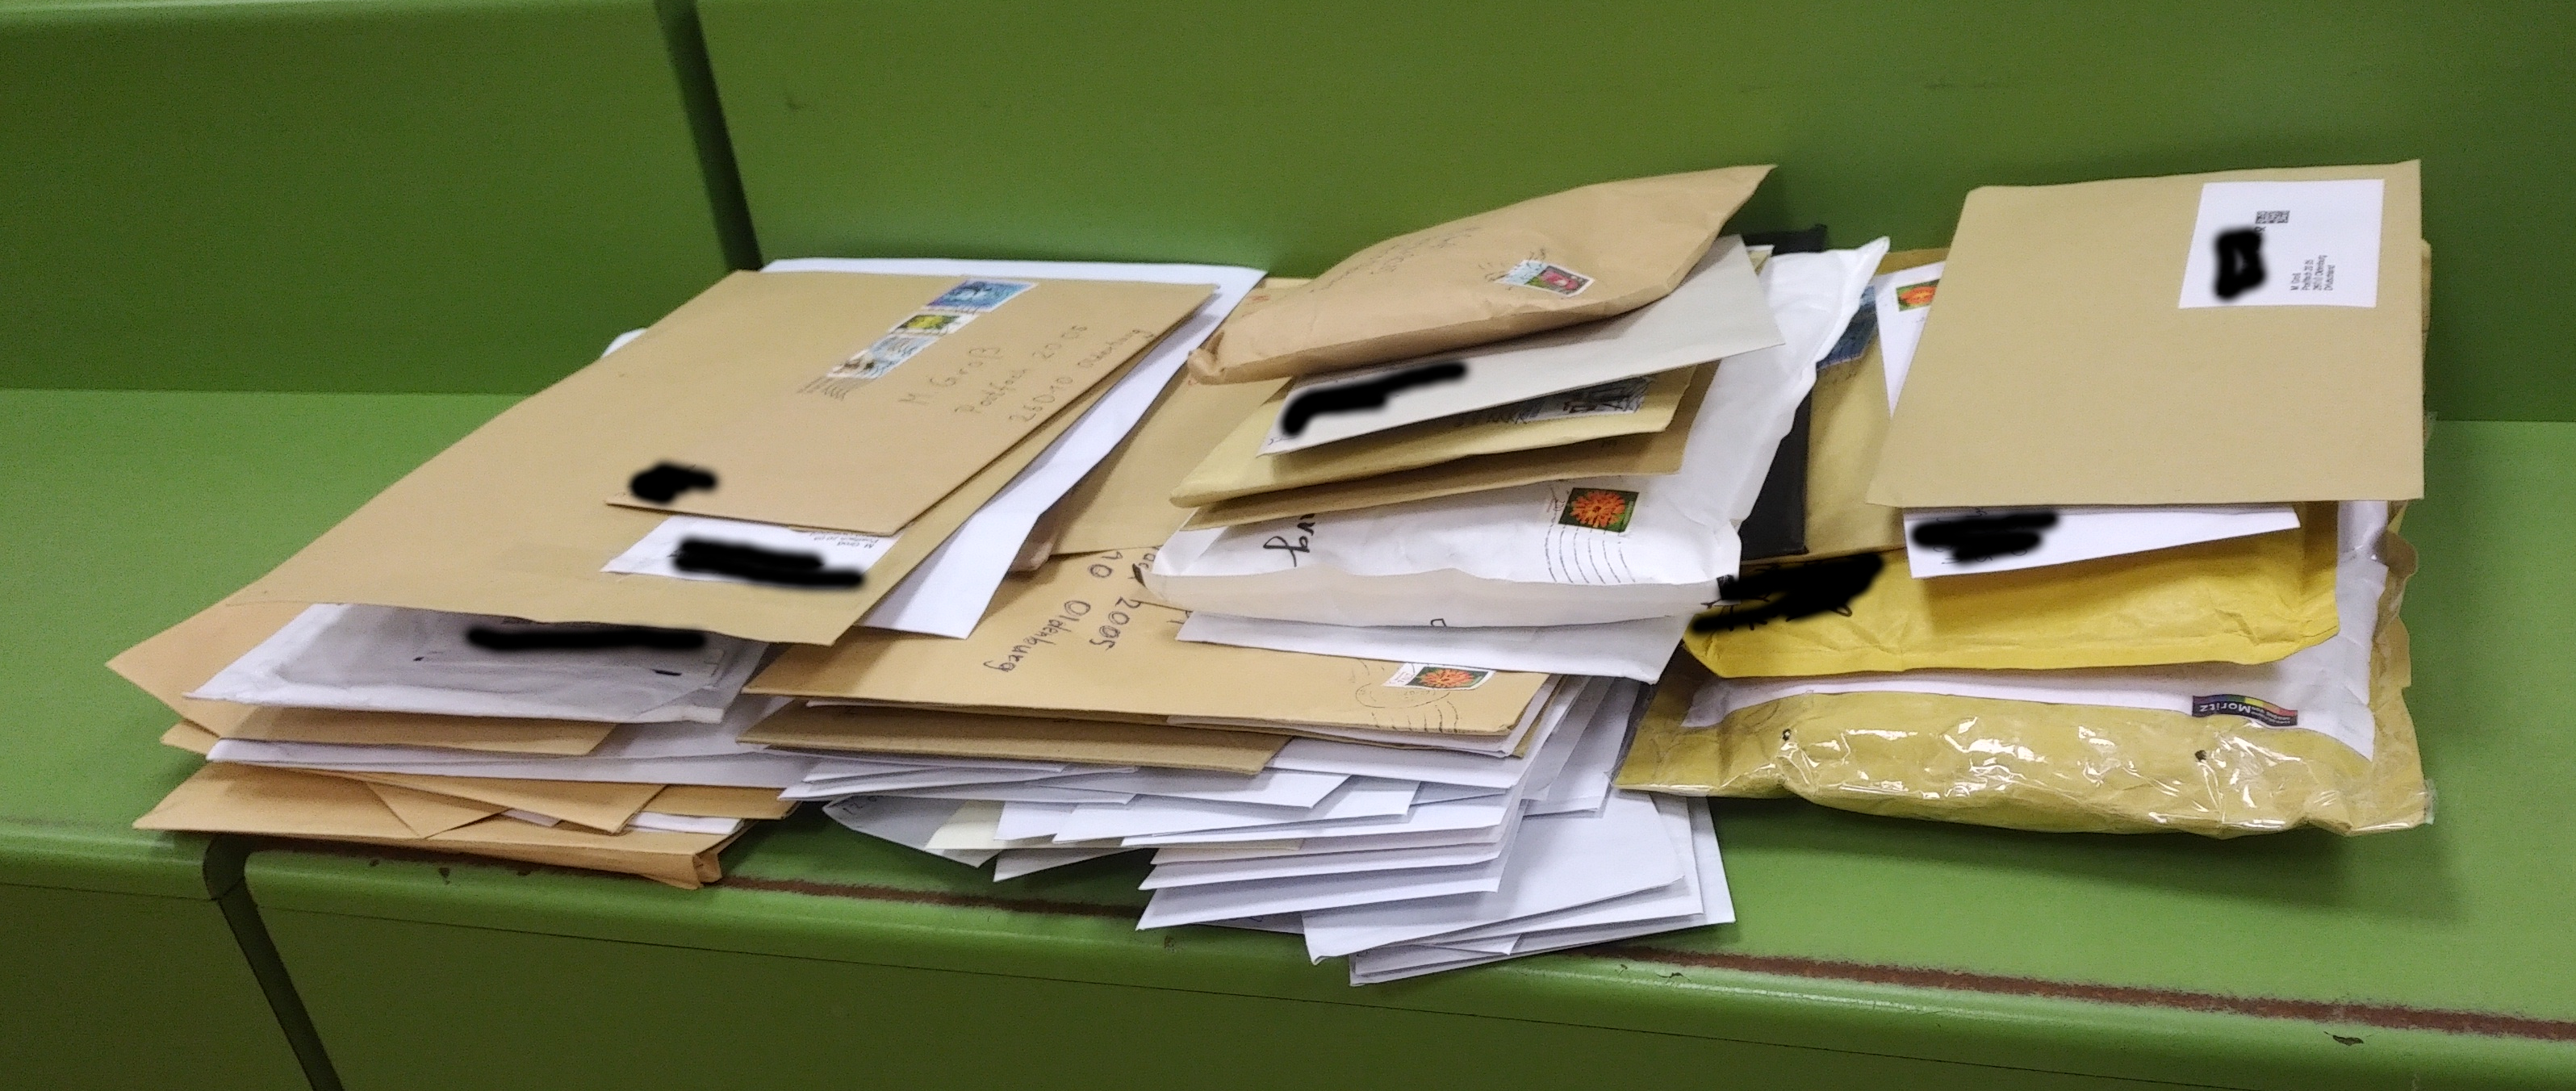 a large stack of envelopes